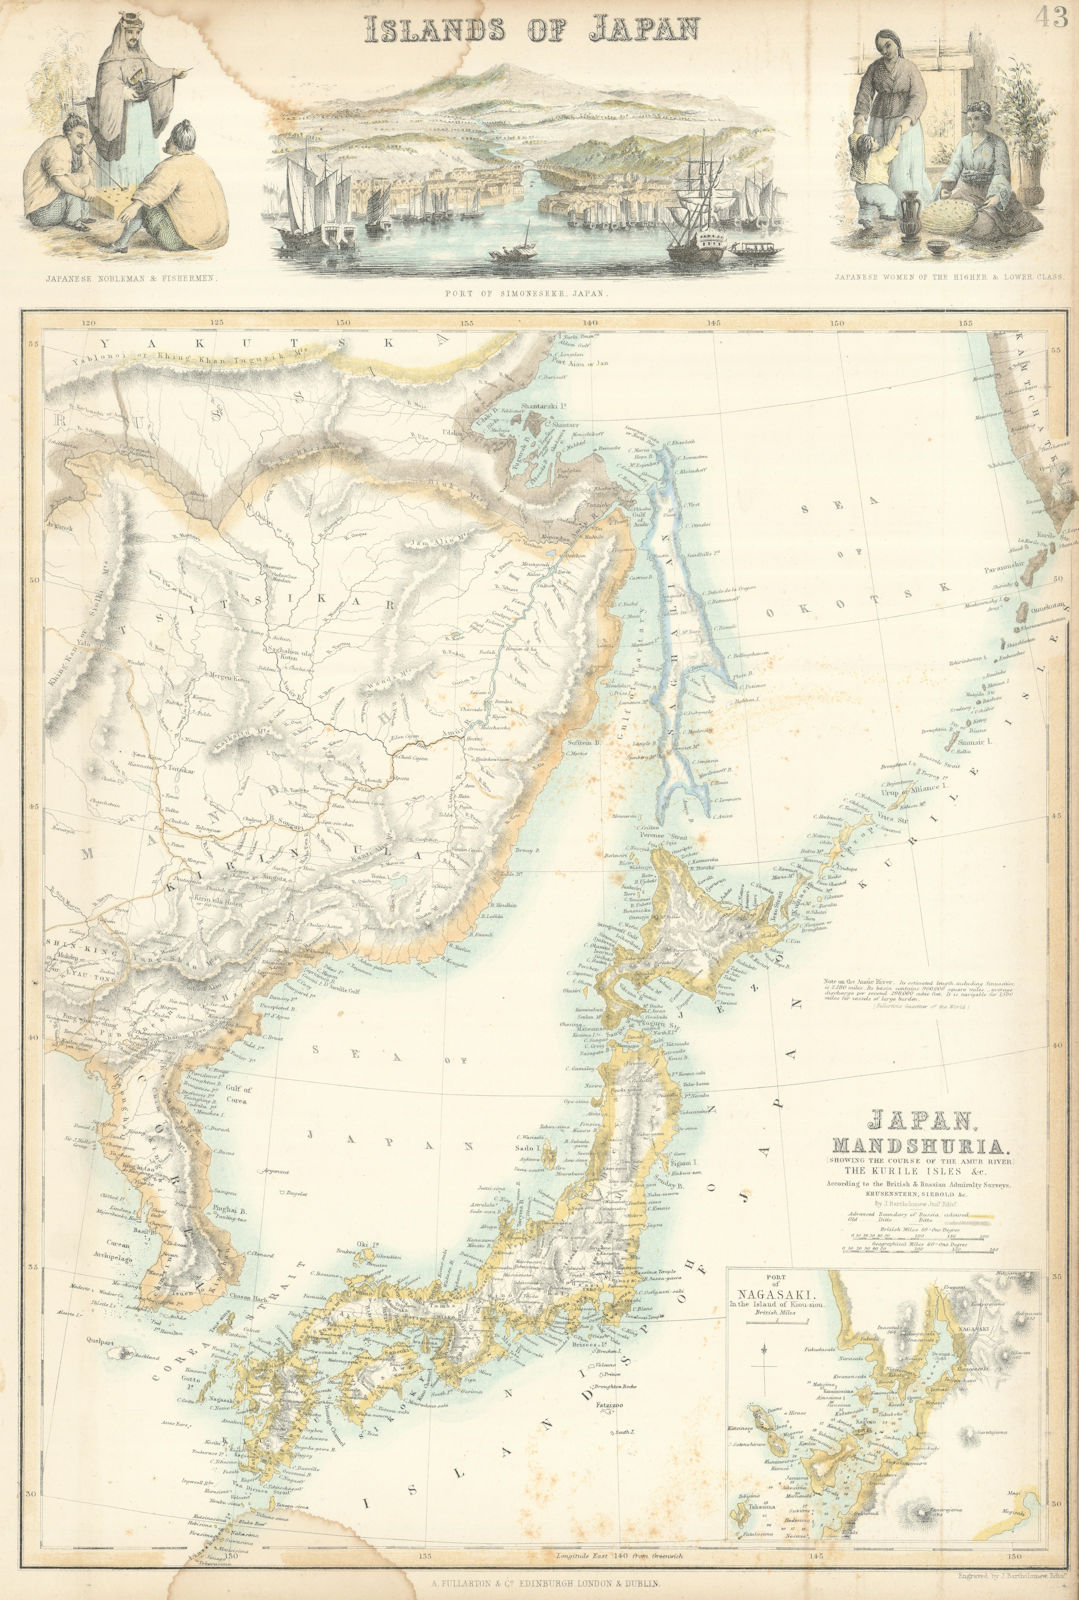 Associate Product Japan & Mandshuria. Shimonoseki & Nagasaki. Manchuria. SWANSTON 1860 old map